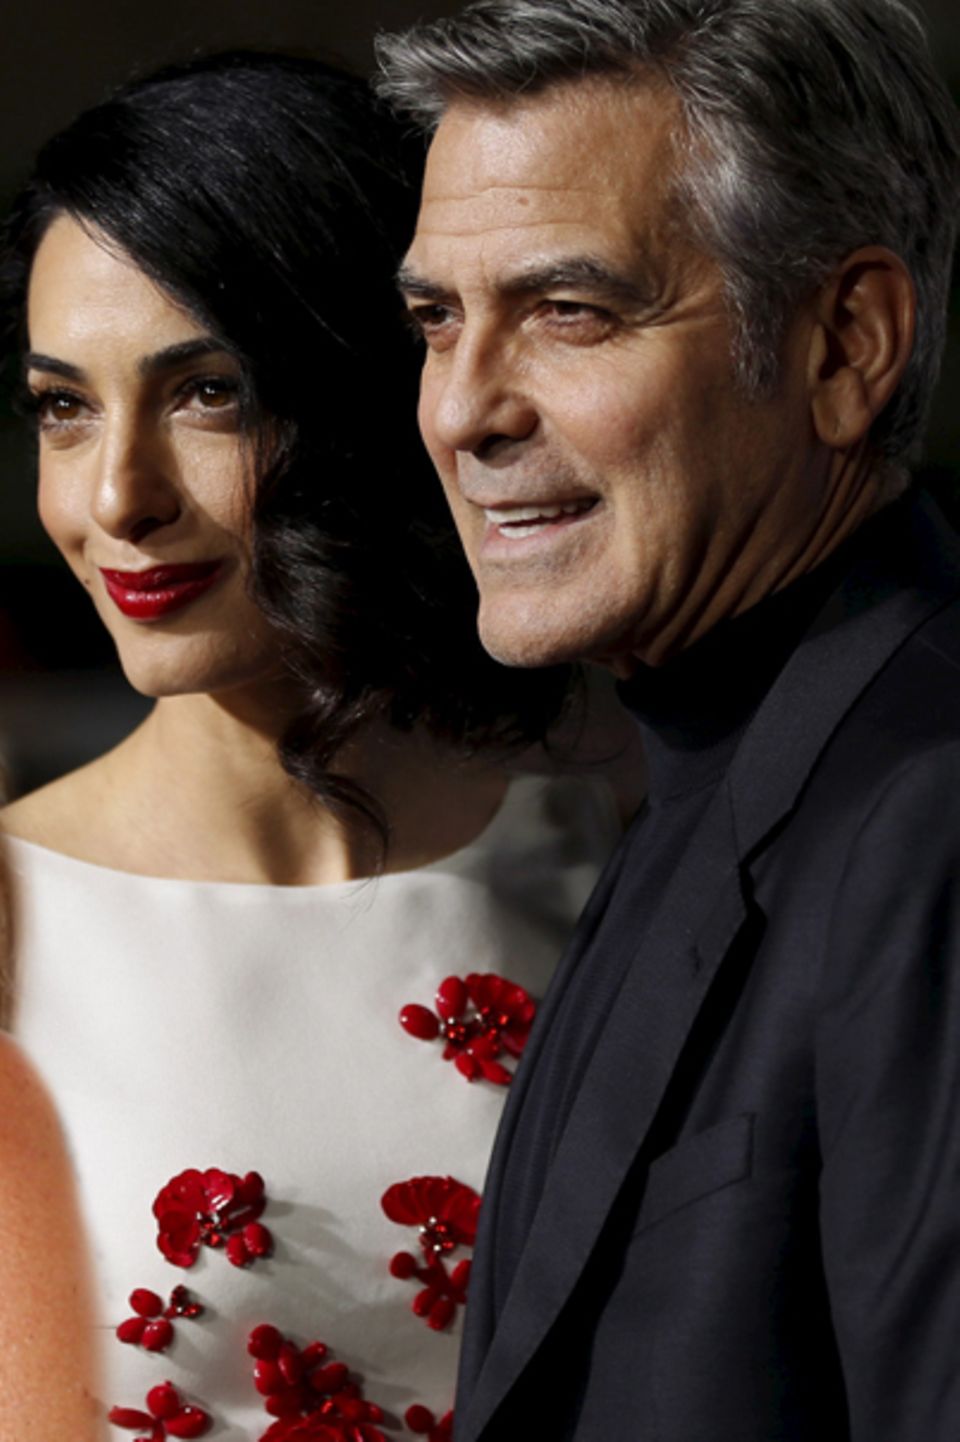 Cindy Crawford, Amal Clooney, George Clooney